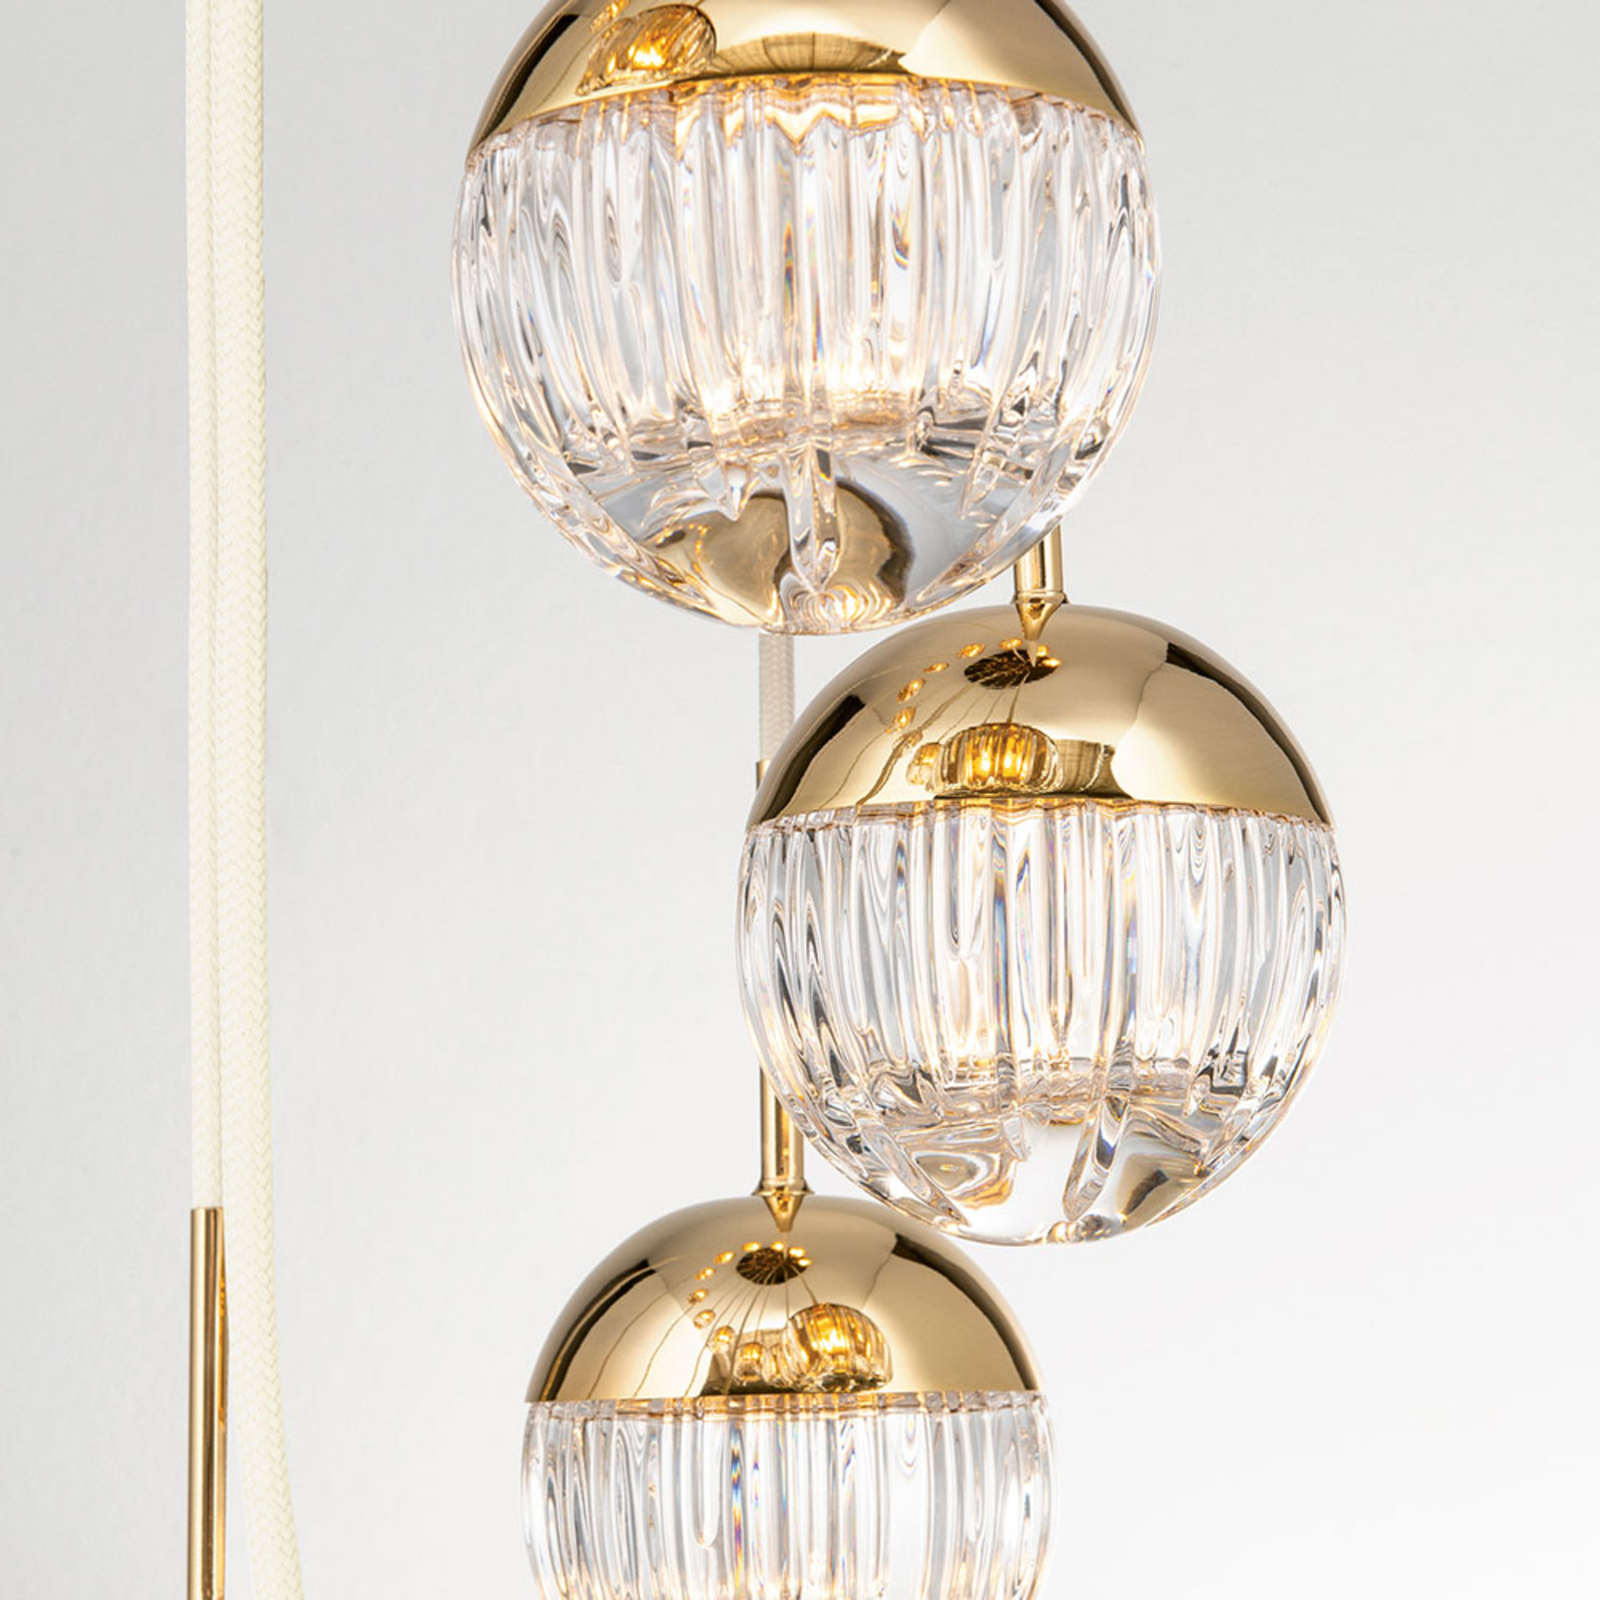 Ball LED hanging light 18-bulb, gold/cream